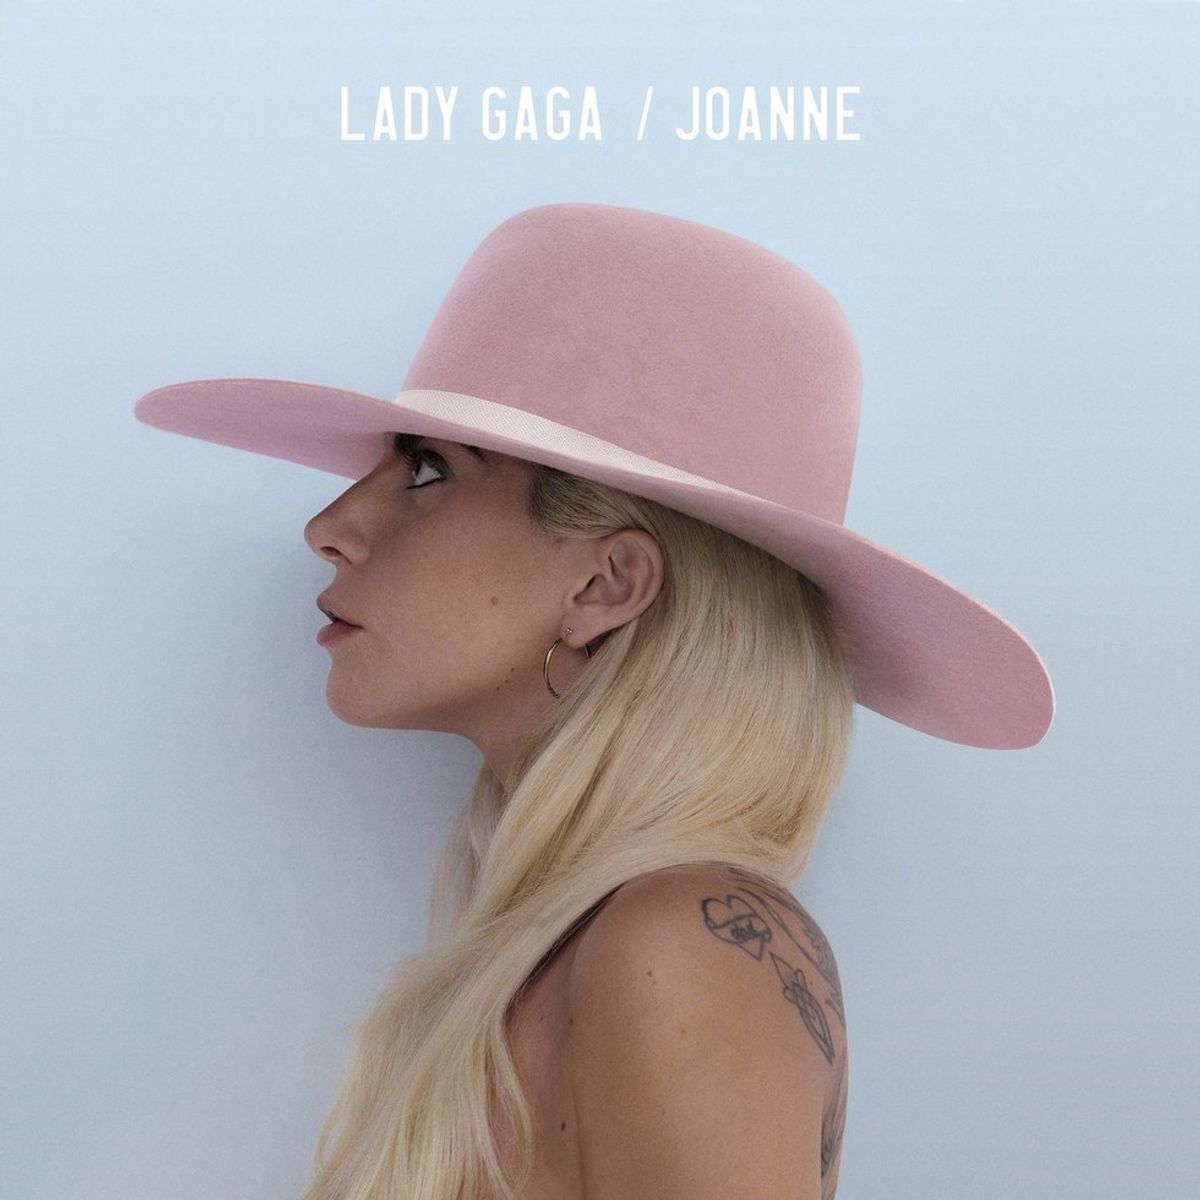 Joanne By Lady Gaga Album Review